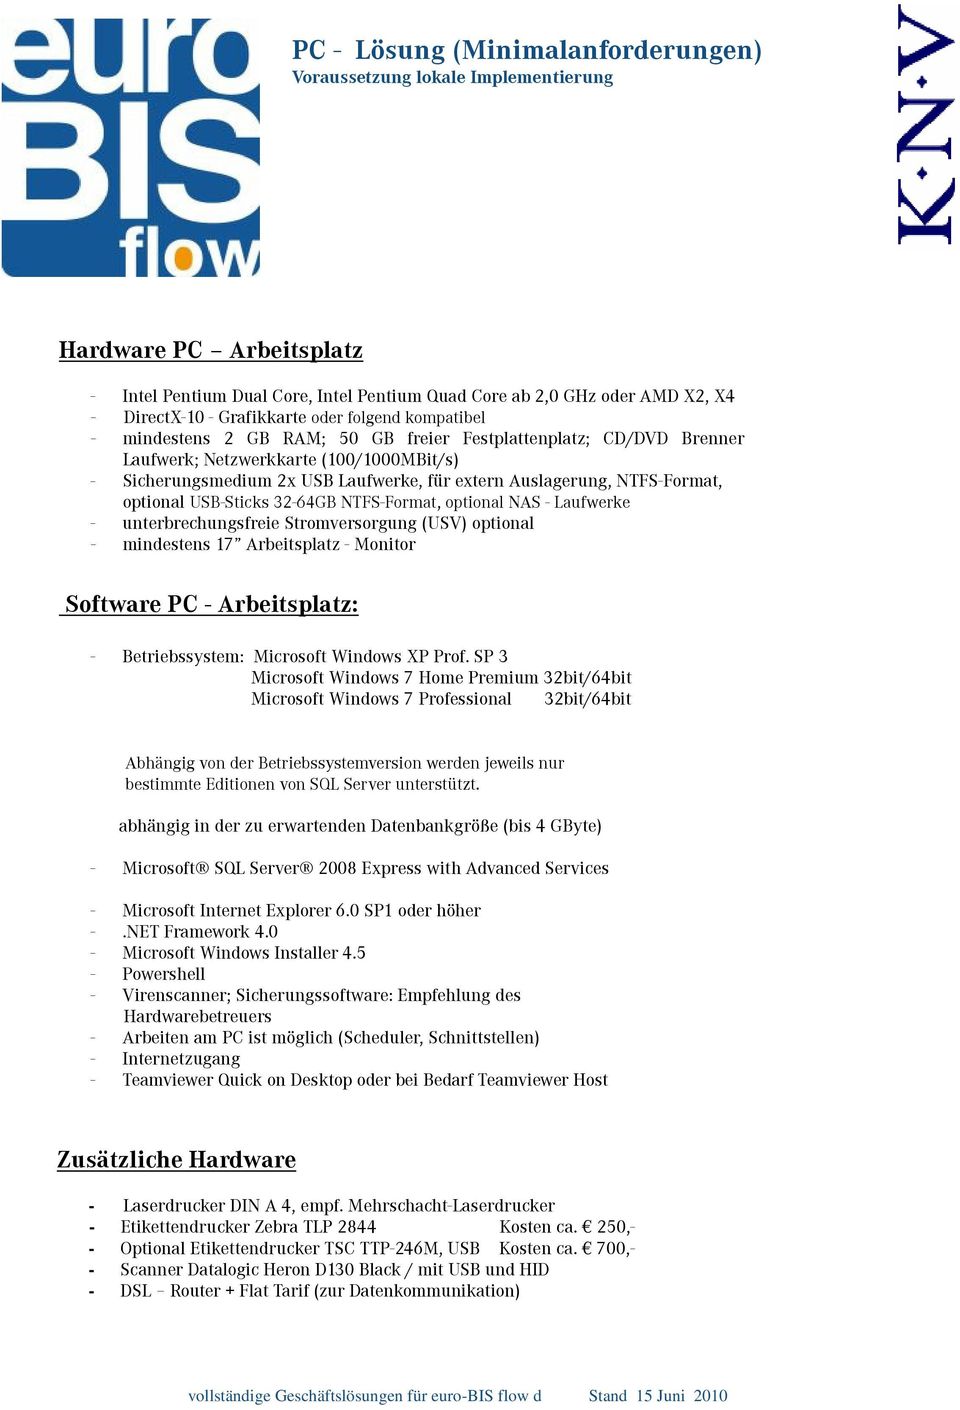 Stromversorgung (USV) optional - mindestens 17 Arbeitsplatz - Monitor Software PC - Arbeitsplatz: - Betriebssystem: Microsoft Windows XP Prof.